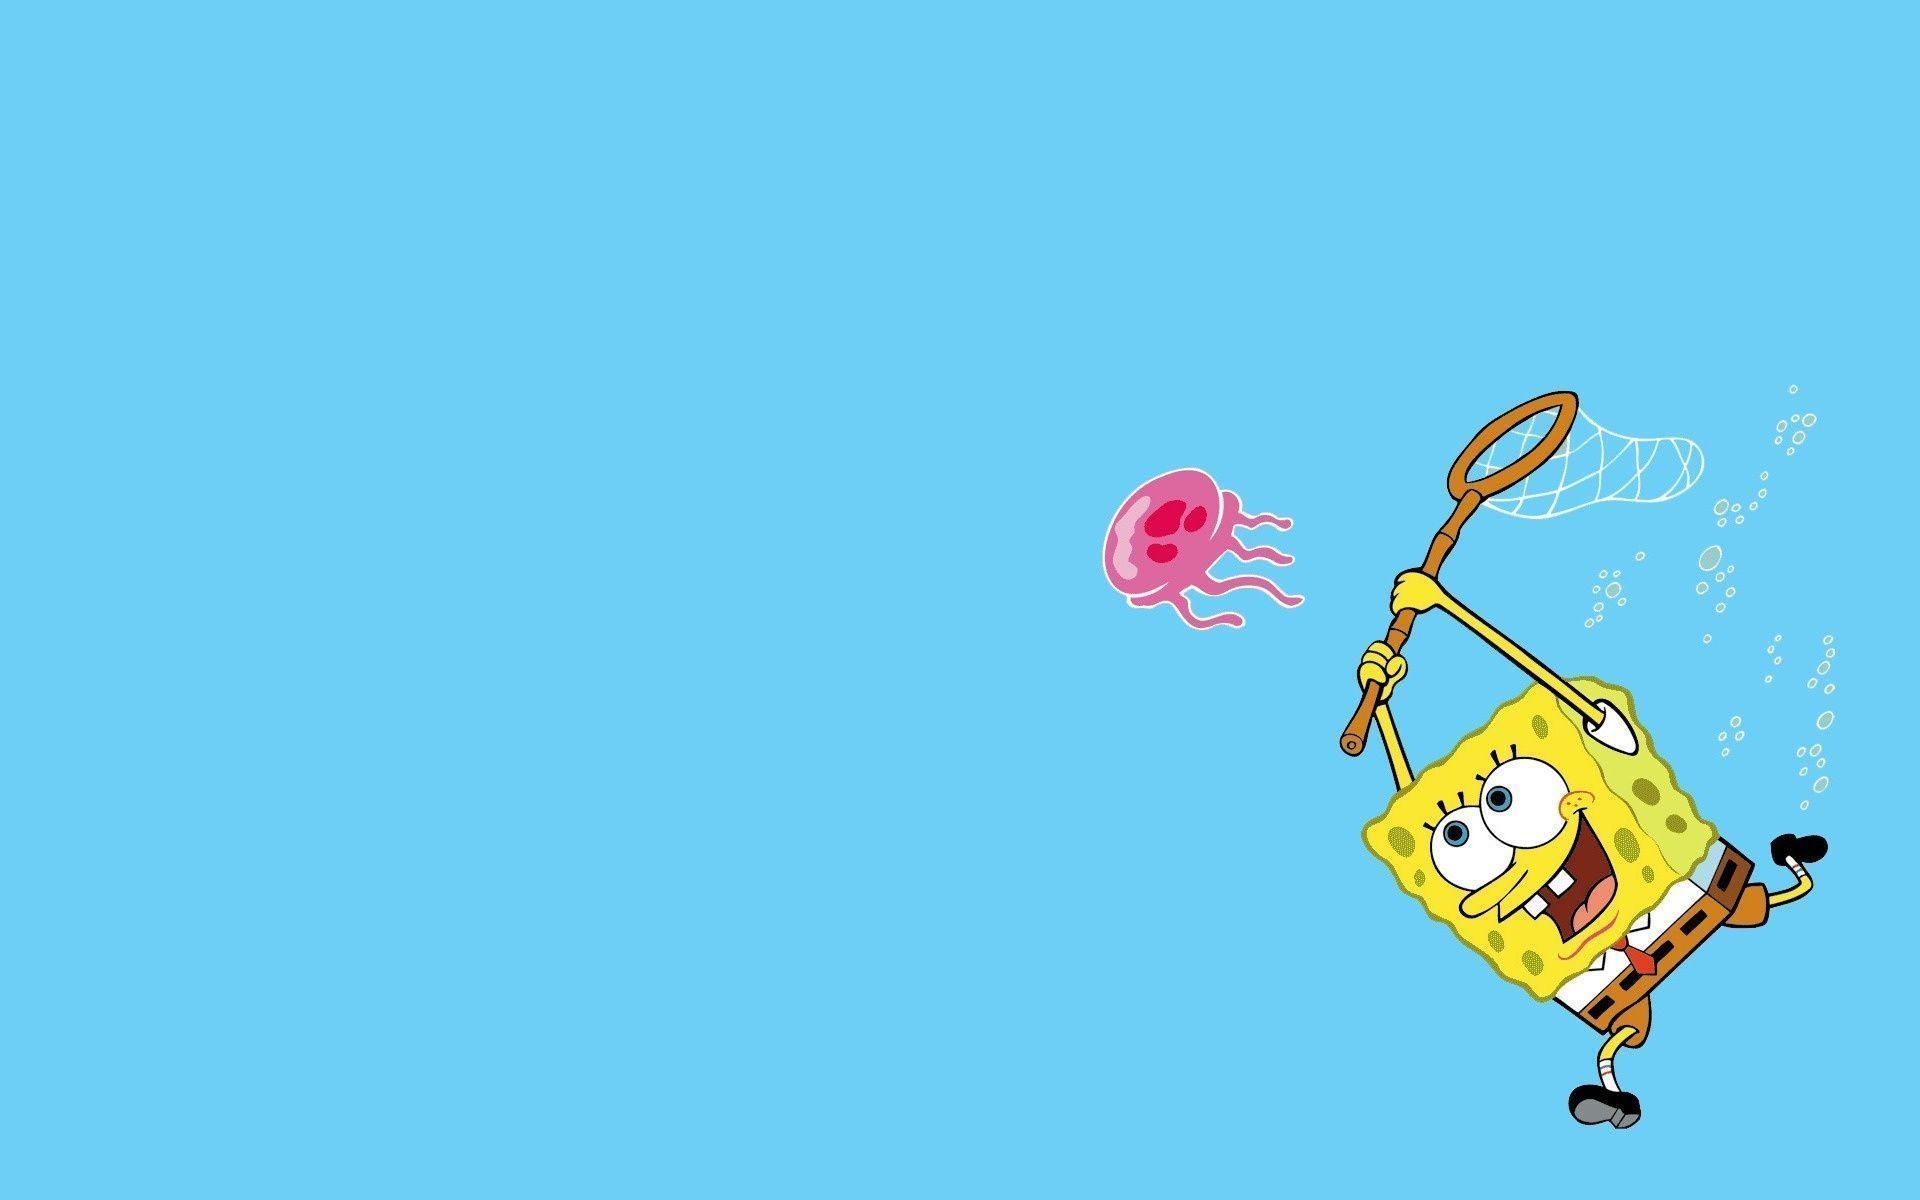 Spongebob Squarepants Background. Download High Quality